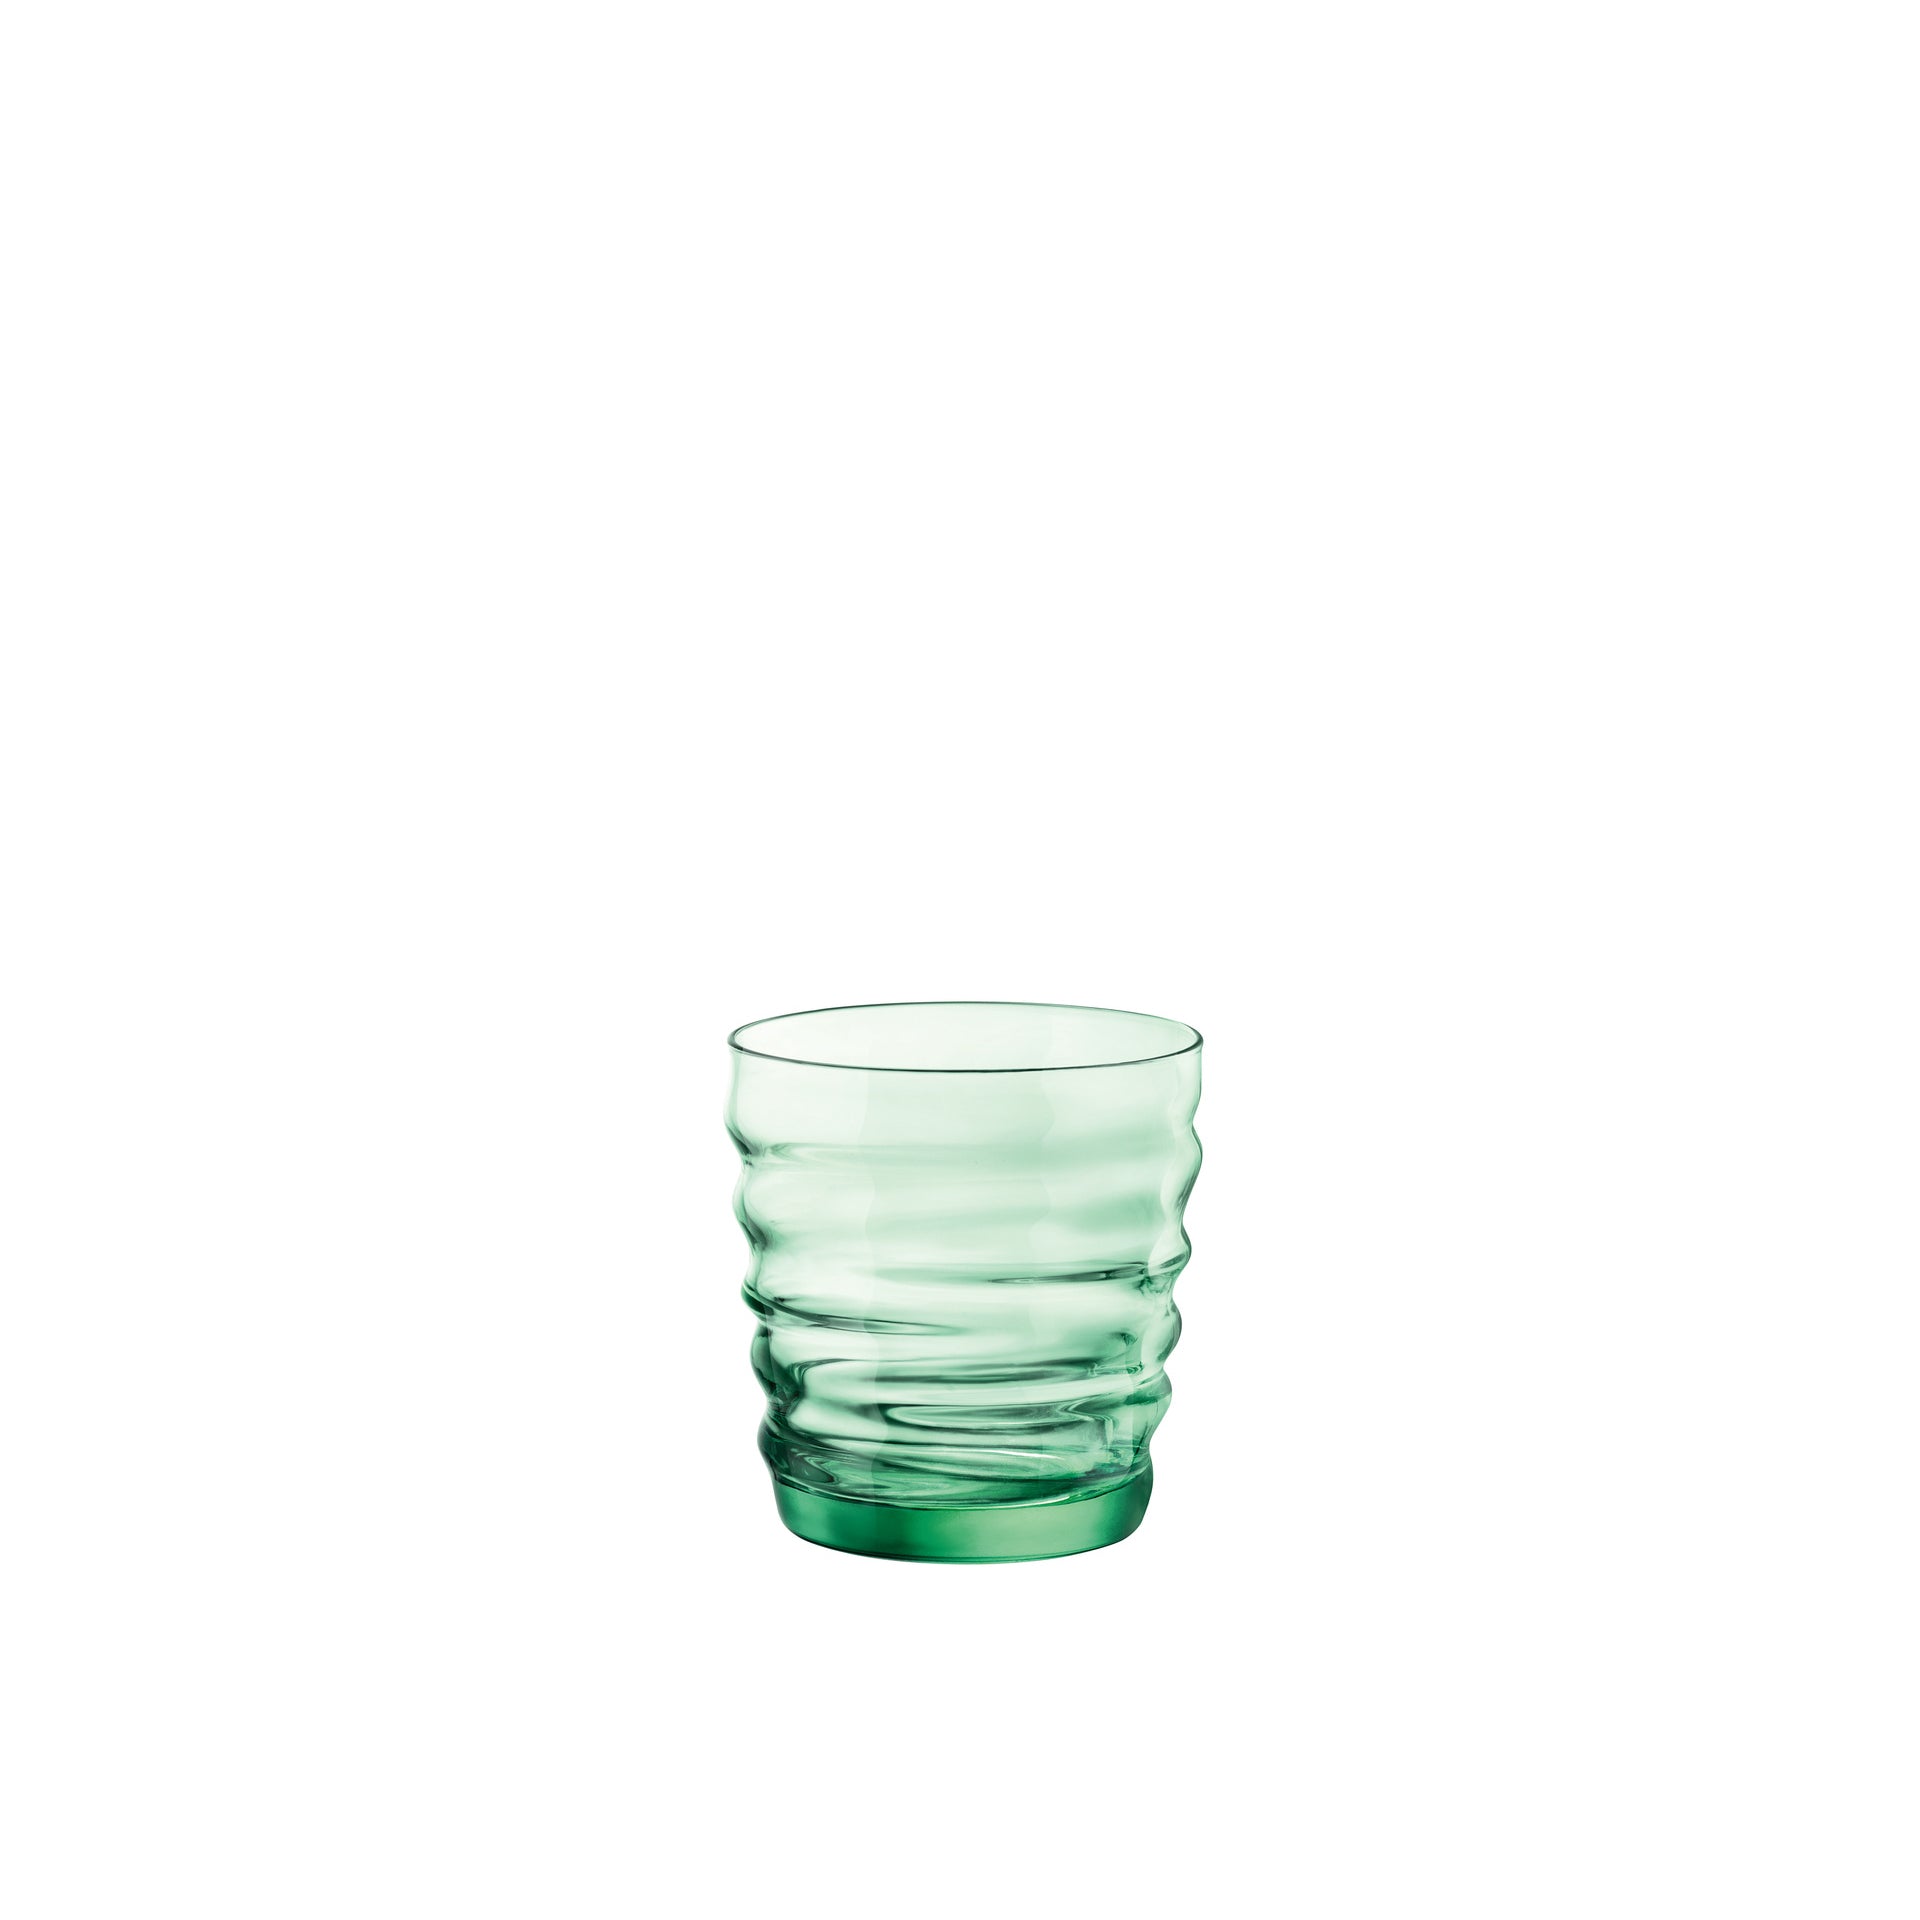 Bormioli Rocco Water Cool Green Glass, Set of 6, 10.25 oz